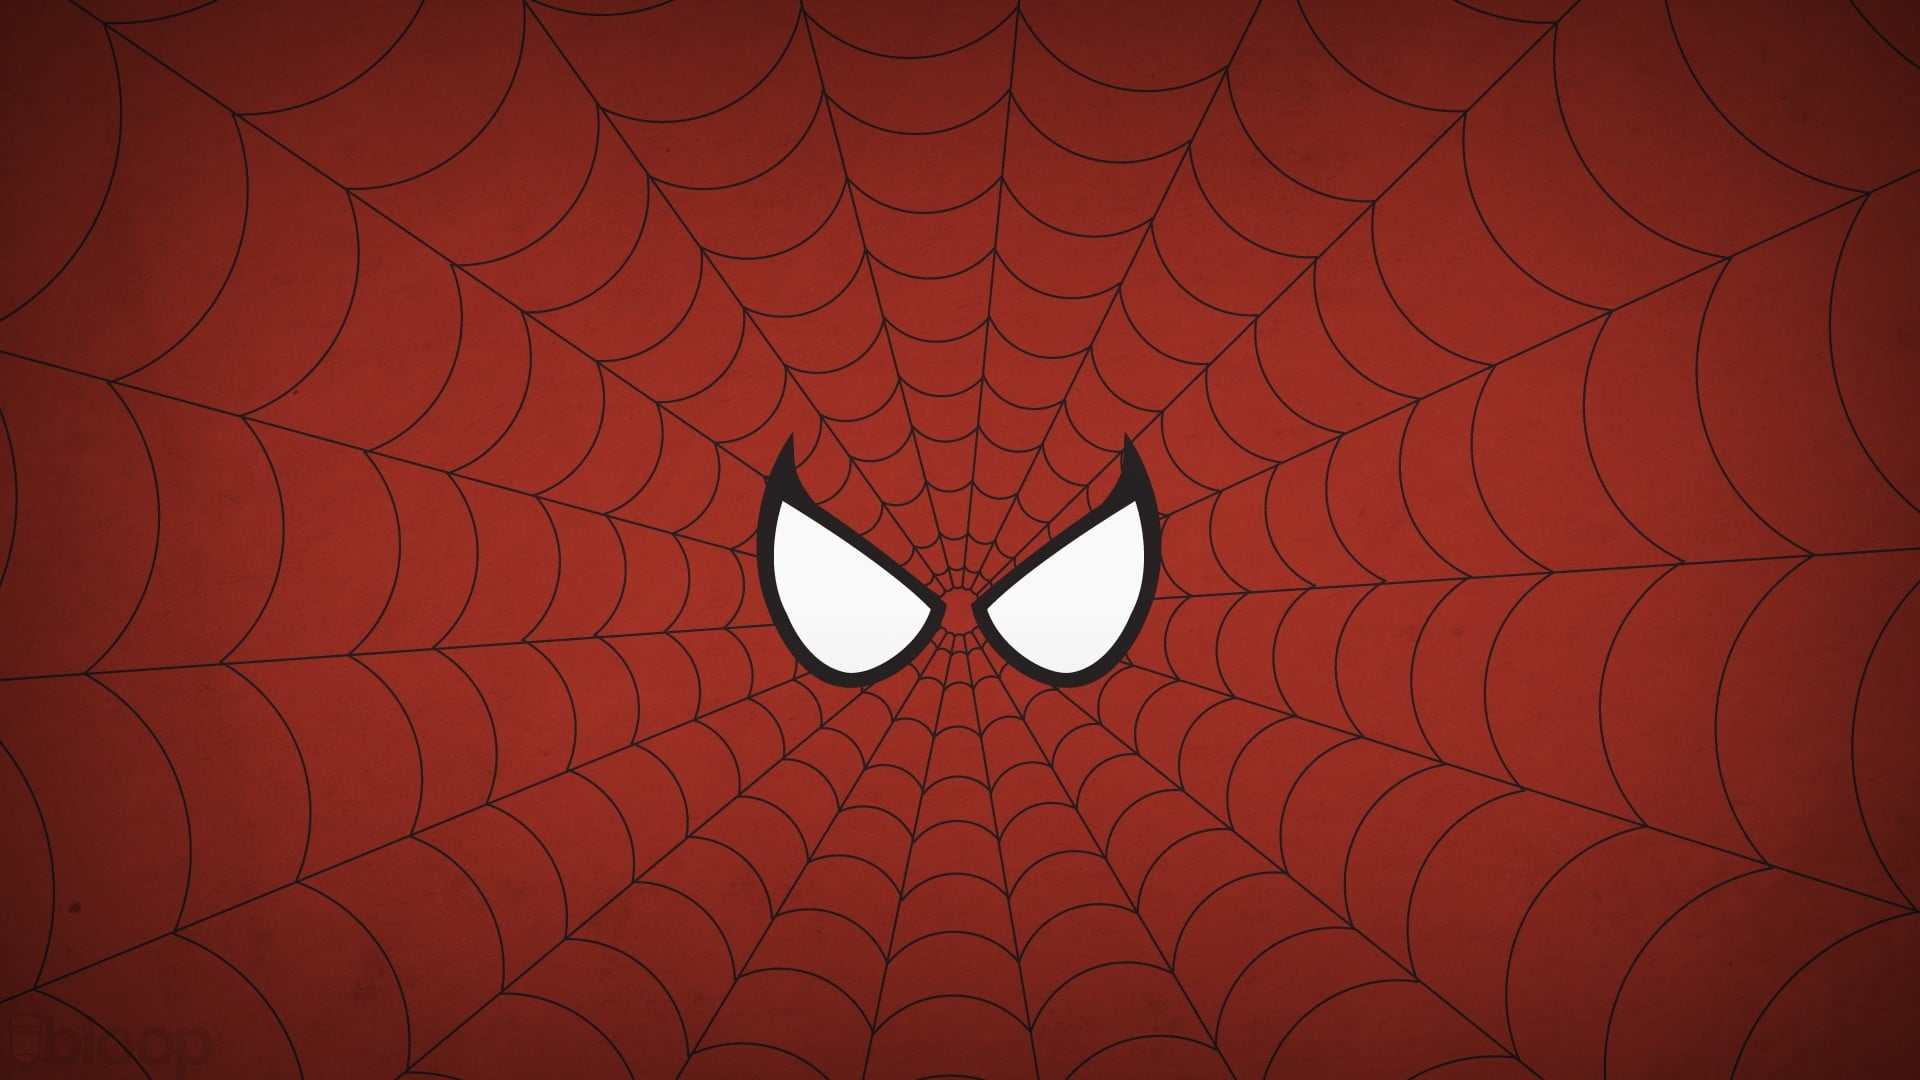 Marvel Spider Man web illustration, Spider-Man eye illustration